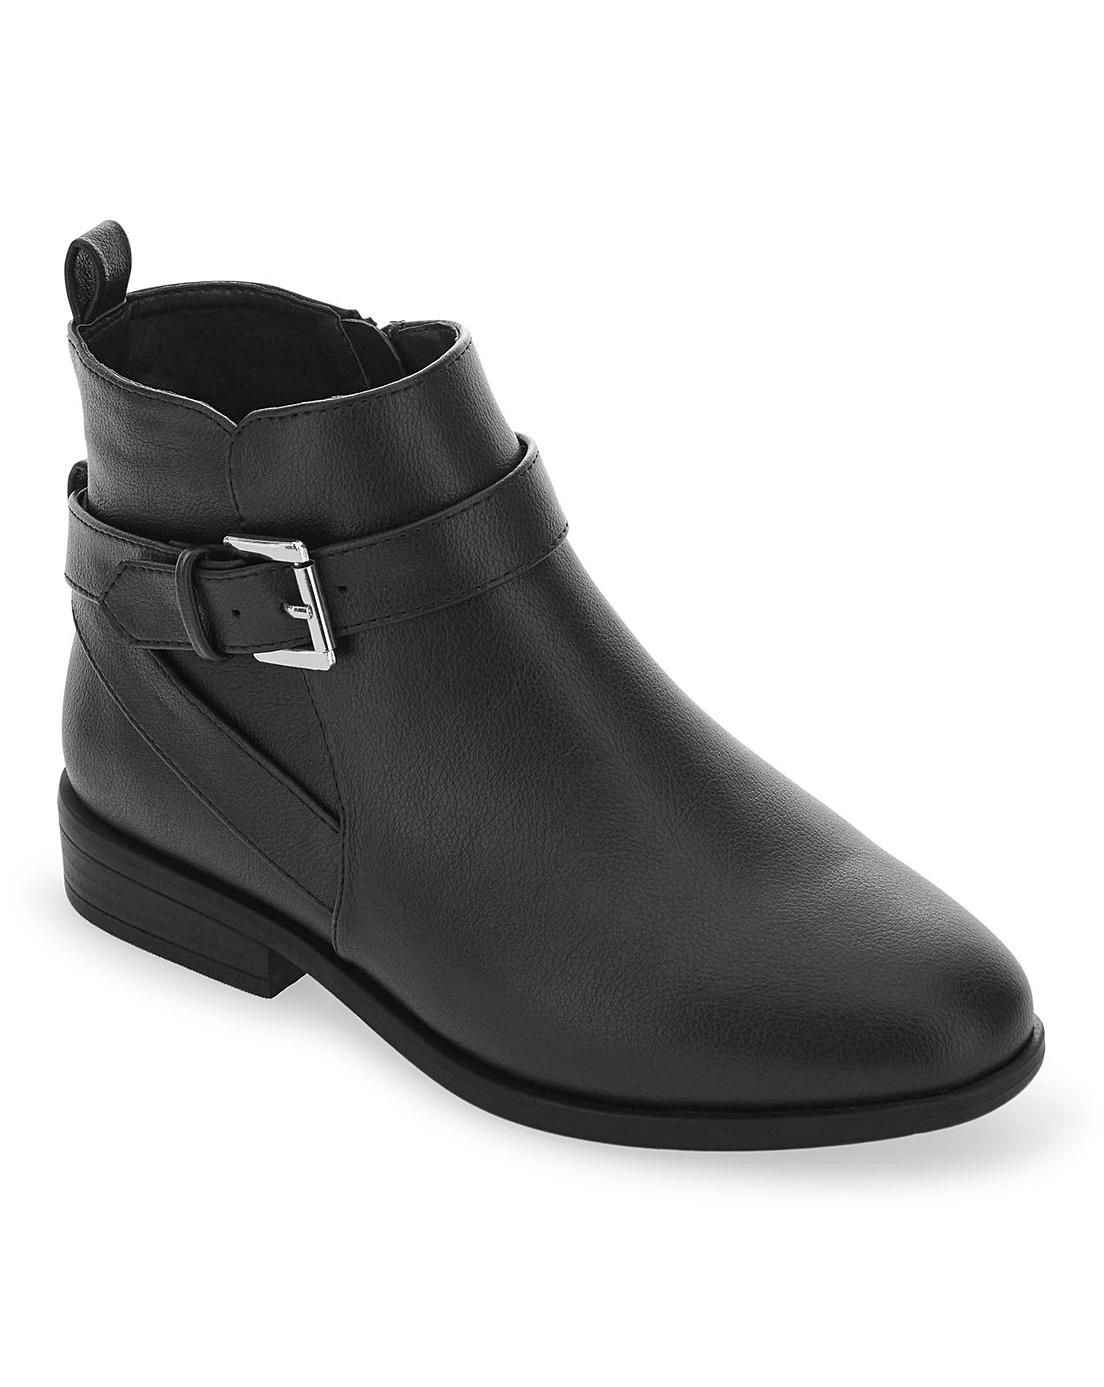 Buckle Detail Ankle Boots EEEEE Fit | Marisota